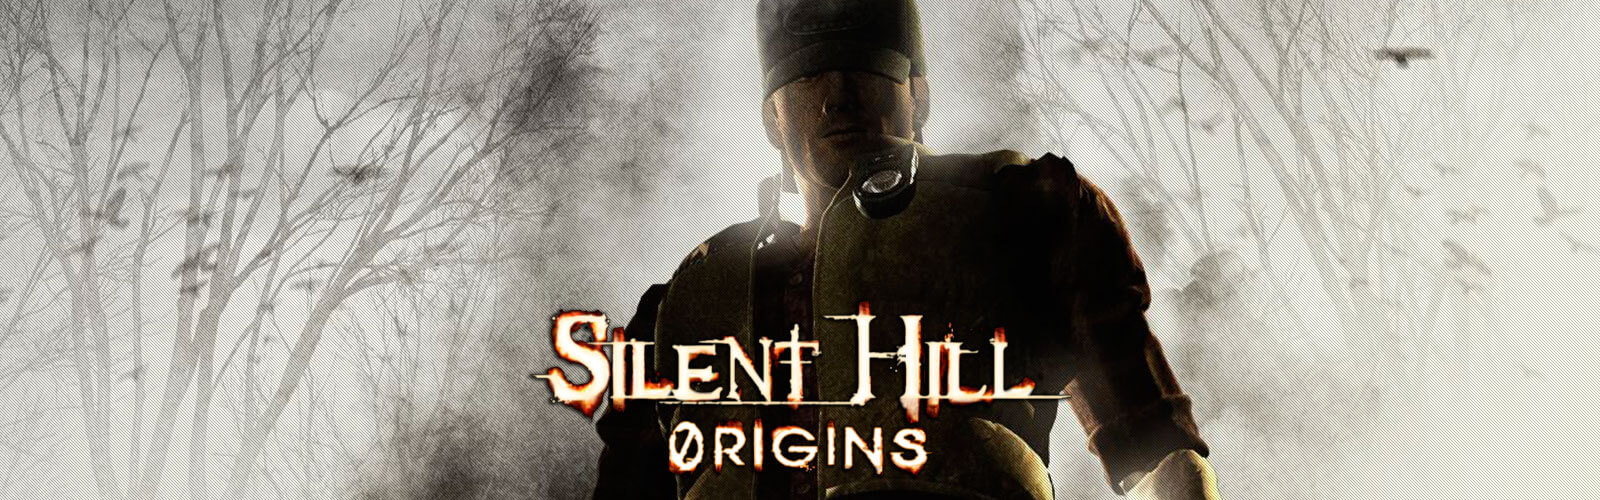 Análise - Silent Hill: Origins (PSP) Cover